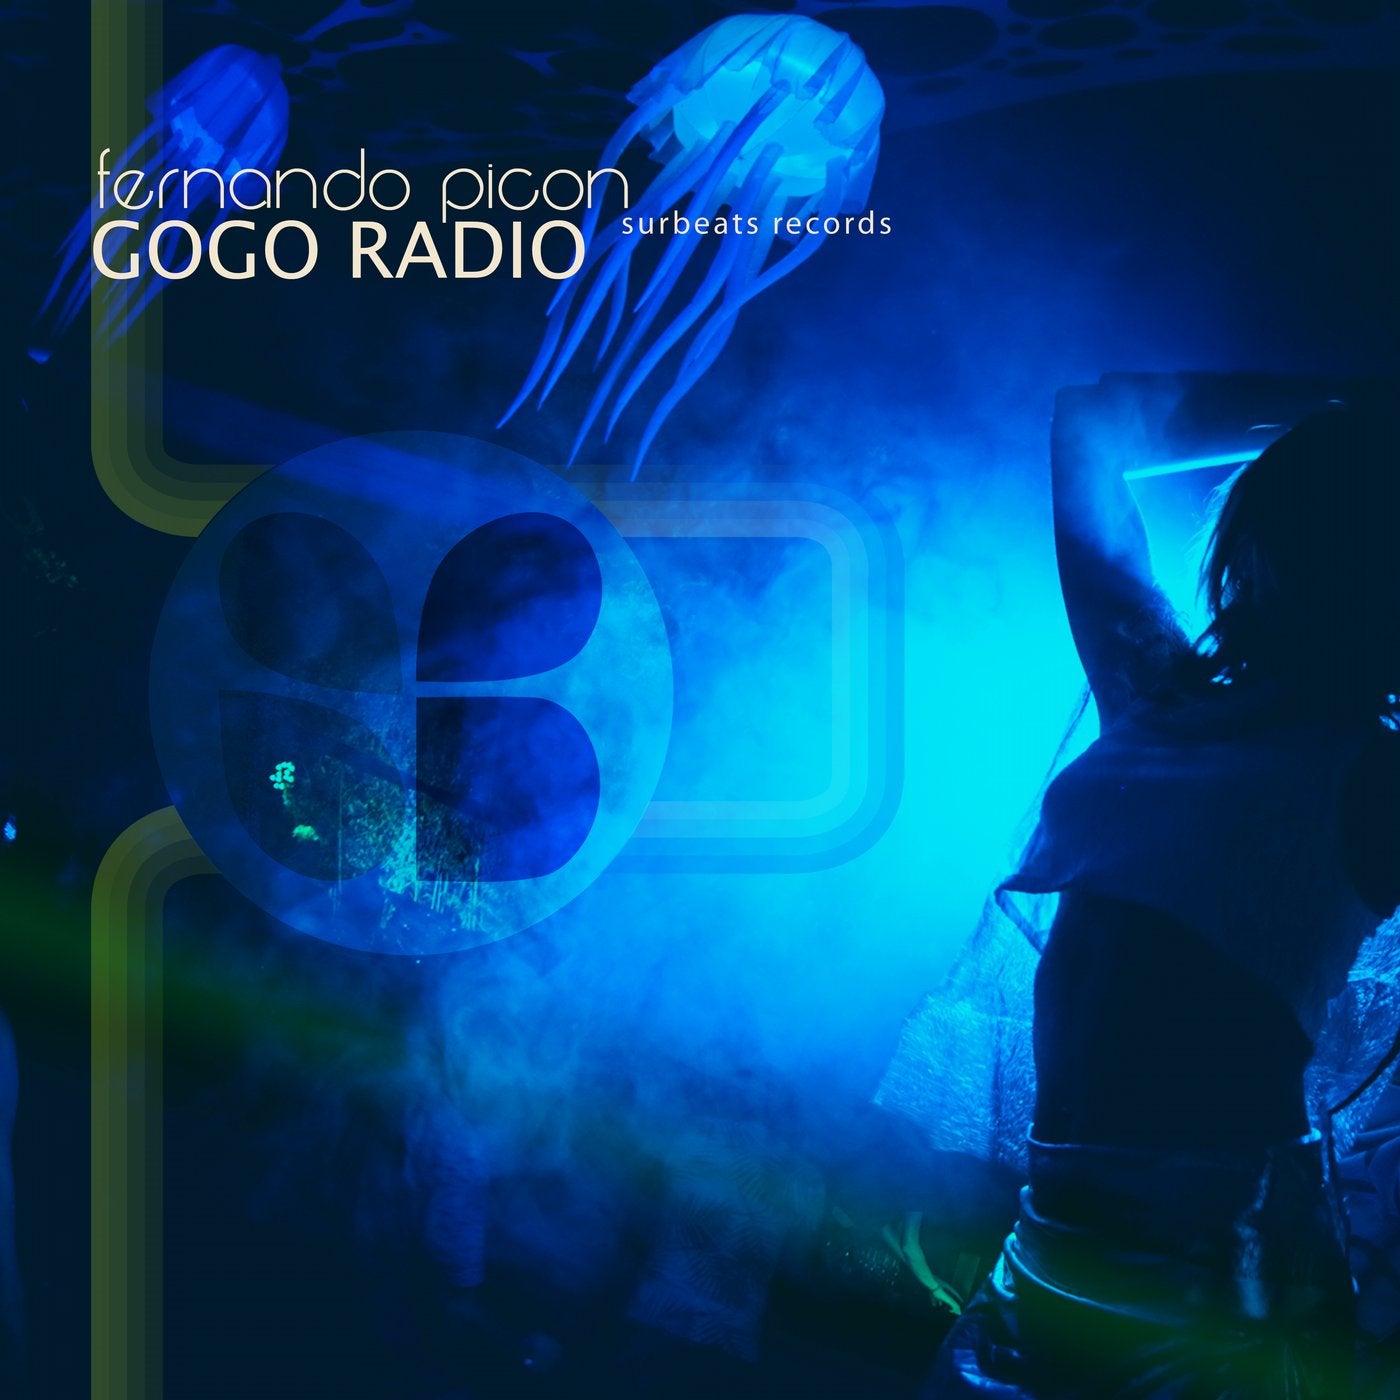 GoGo Radio